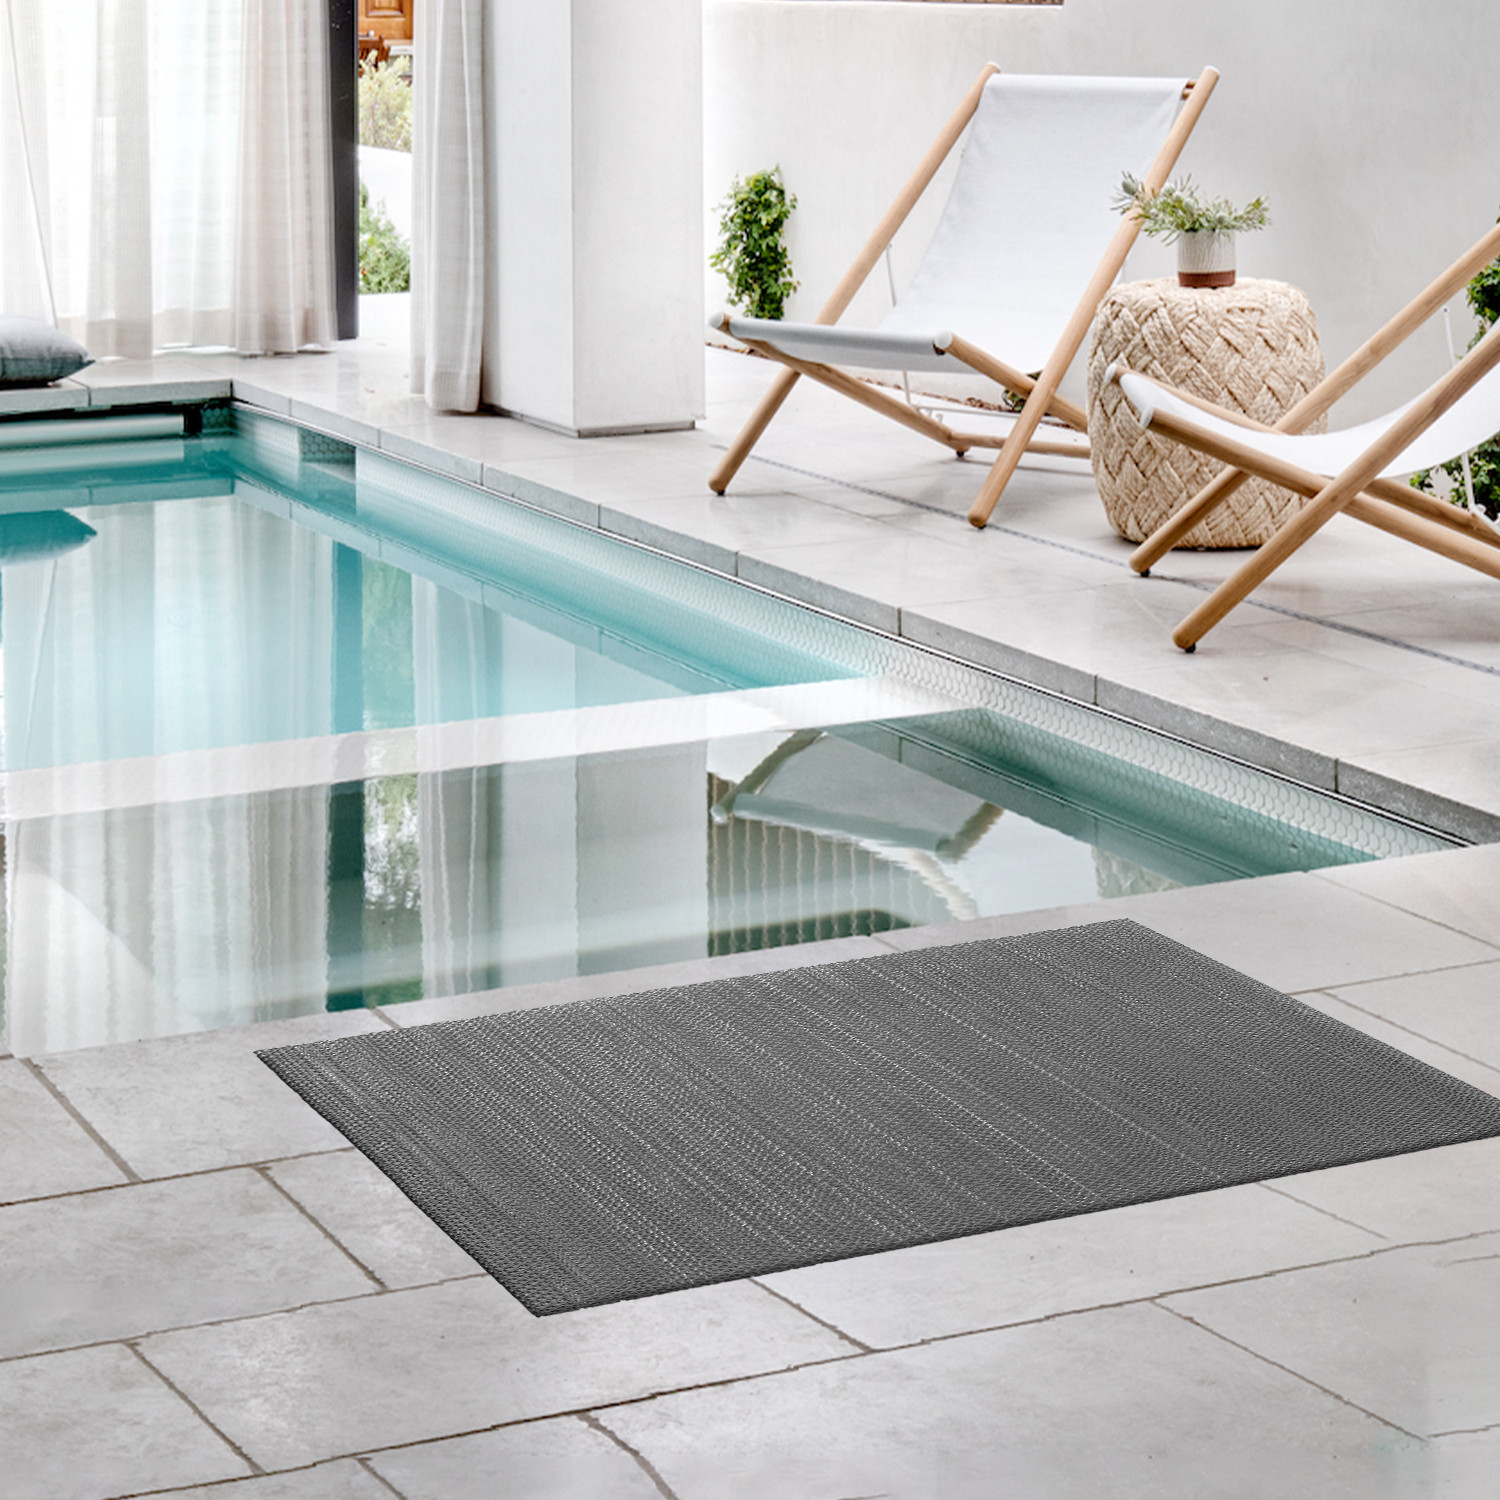 Kuber Industries Rubber Waterproof Anti-Skid Swimming Pool Mat|Shower Mat|Rainmat For Entrance Area,Bathroom,2 x 3 Feet (Gray)